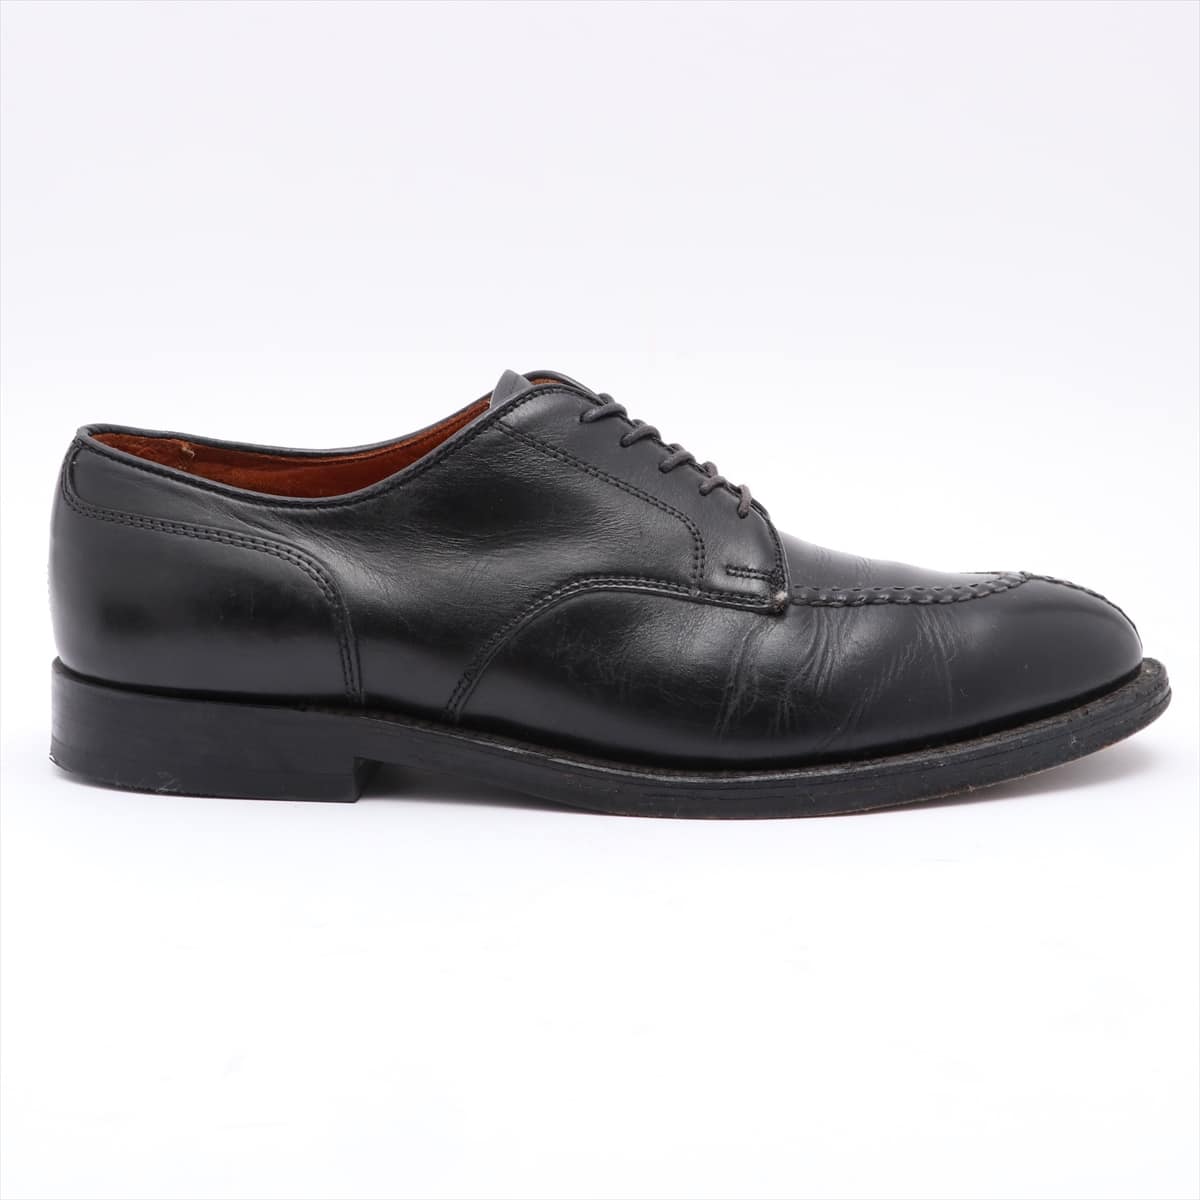 Alden Leather Leather shoes 8 Men's Black 961 Resoled